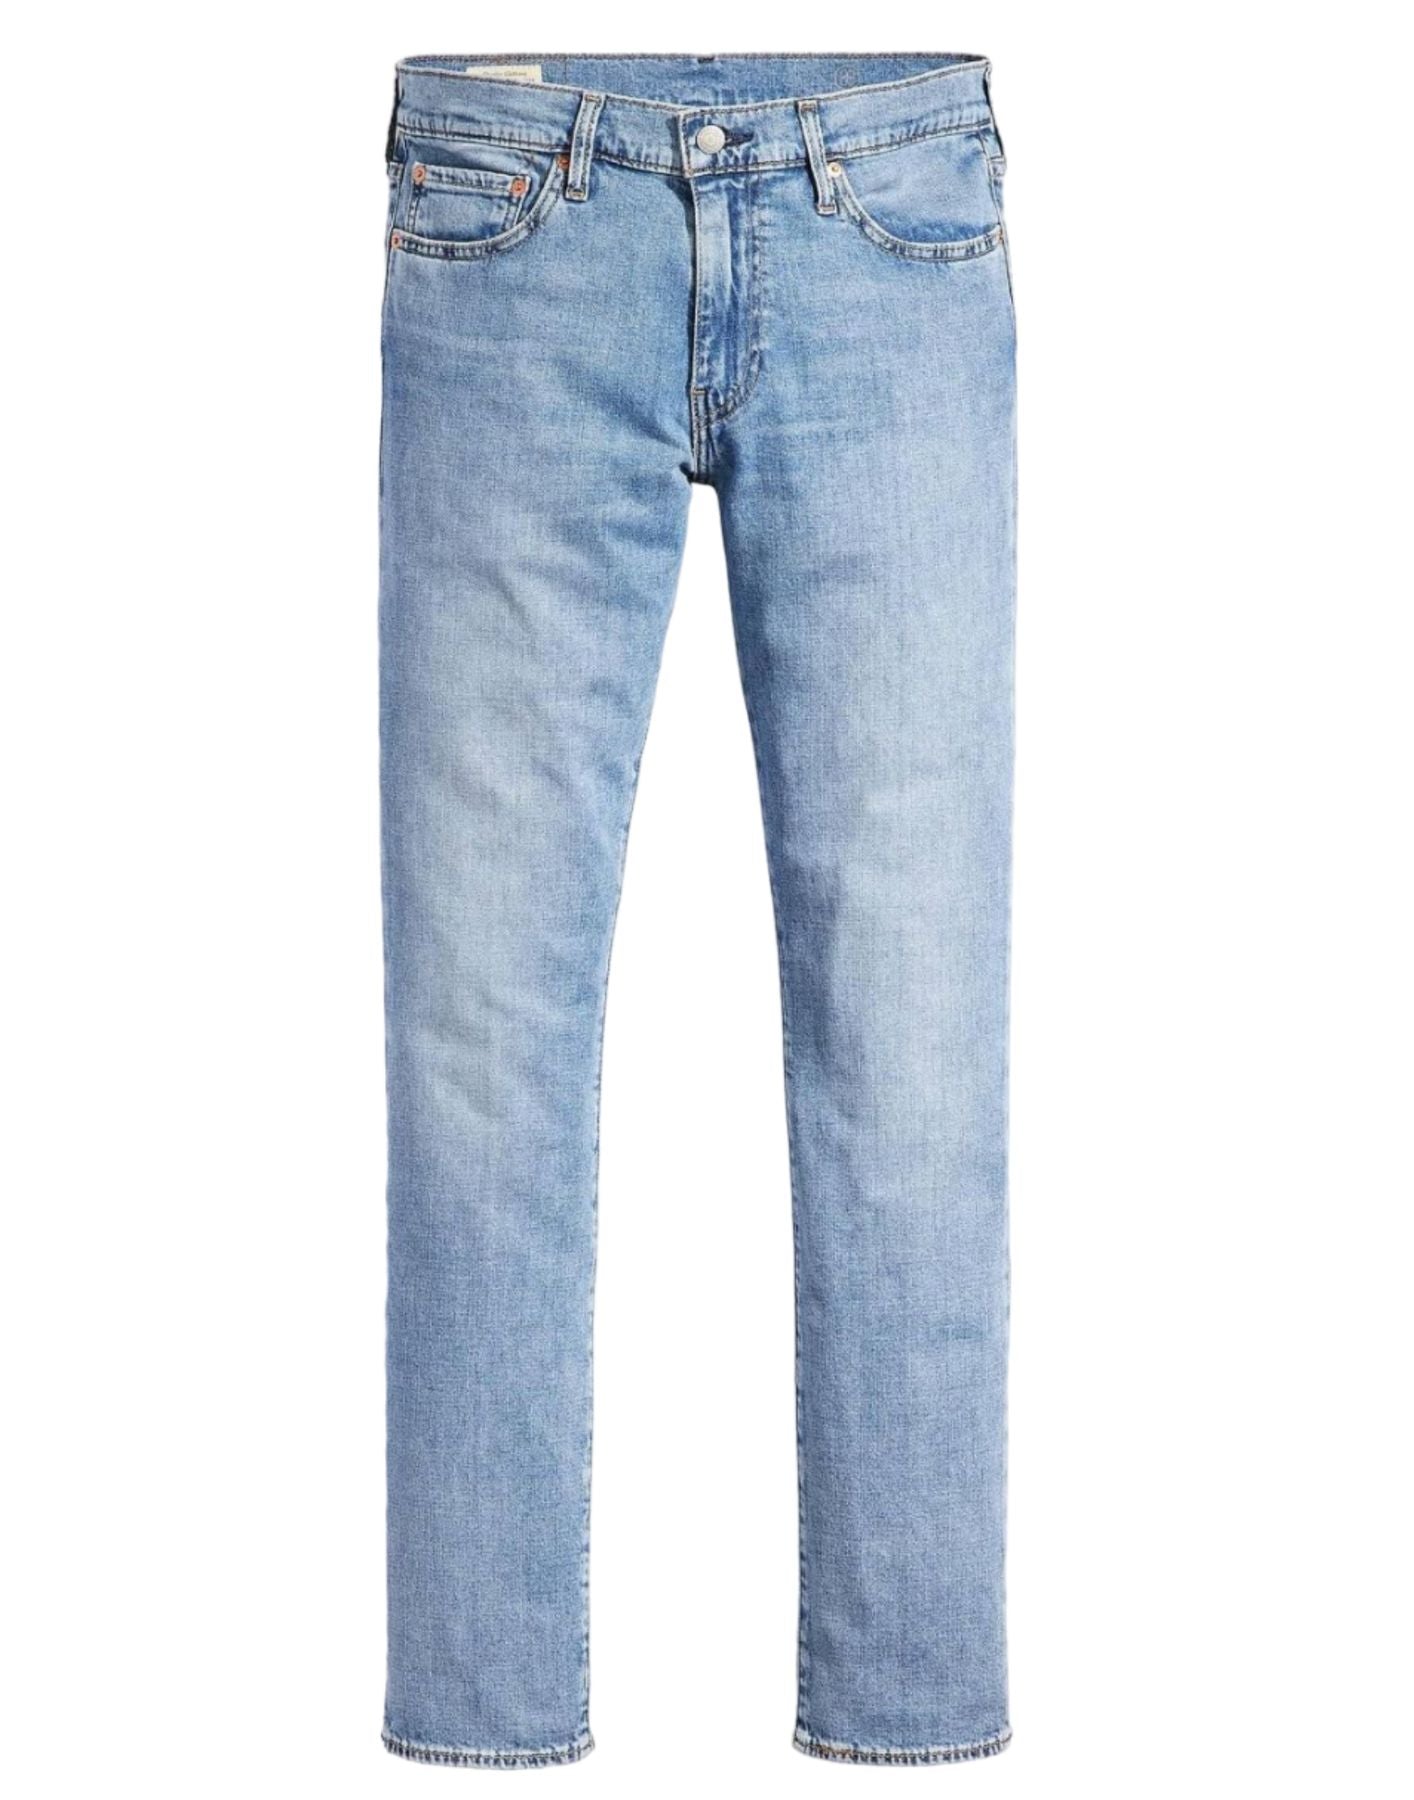 Jeans für Mann 04511 5933 Blue Levi's